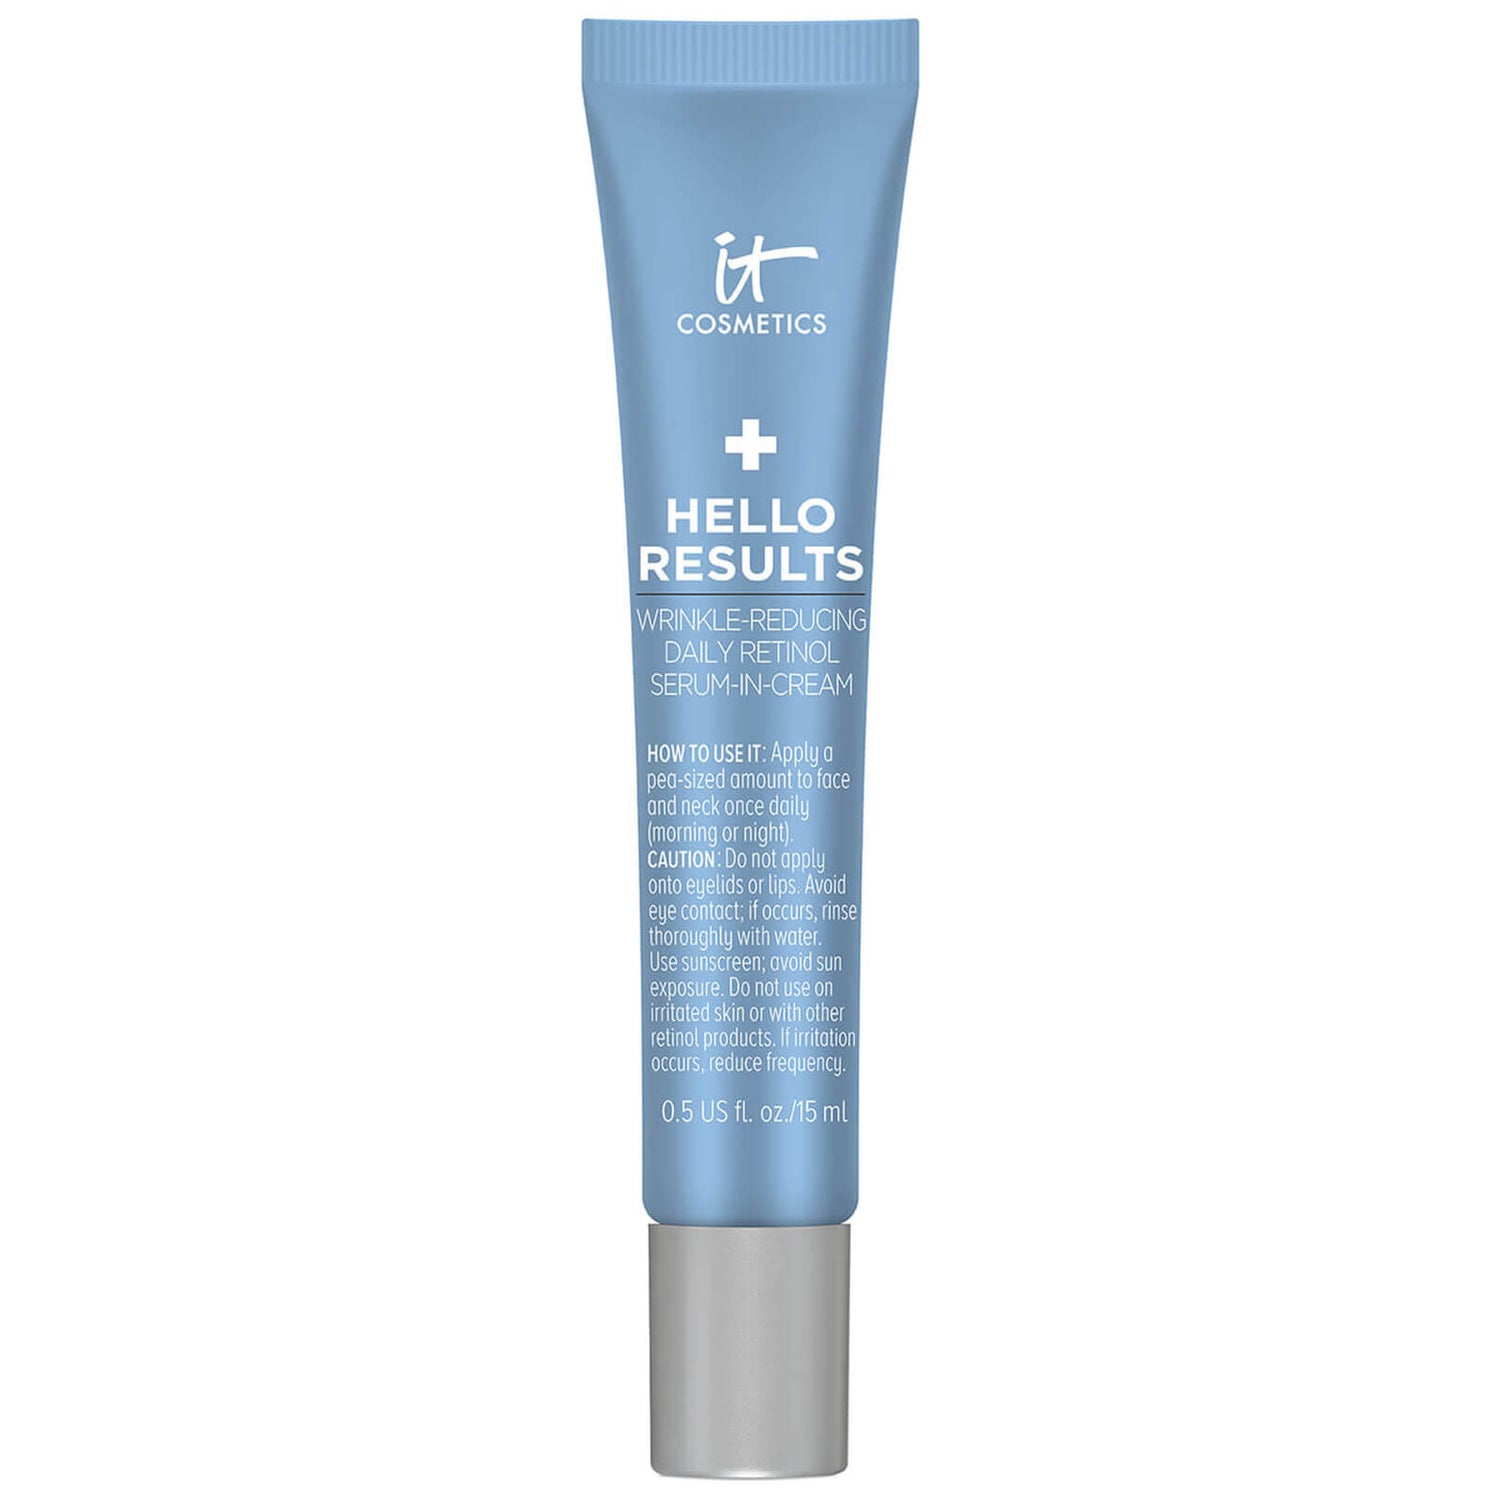 IT Cosmetics Hello Results Wrinkle-Reducing Daily Retinol Cream (Various Sizes)